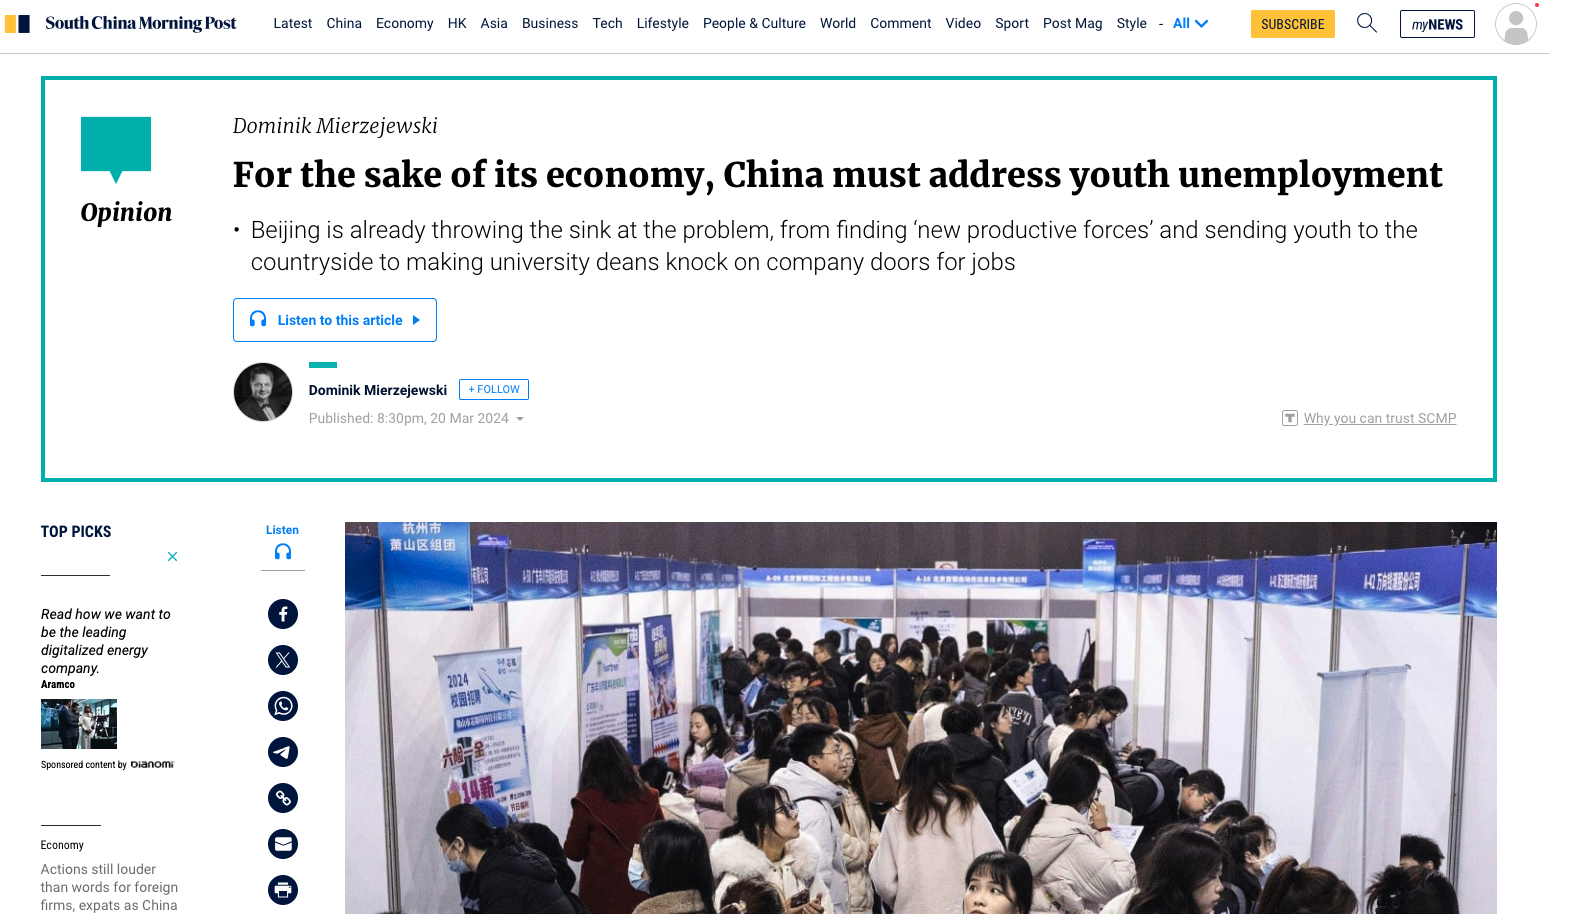 Zrzut ekranu strony internetowej South China Morning Post